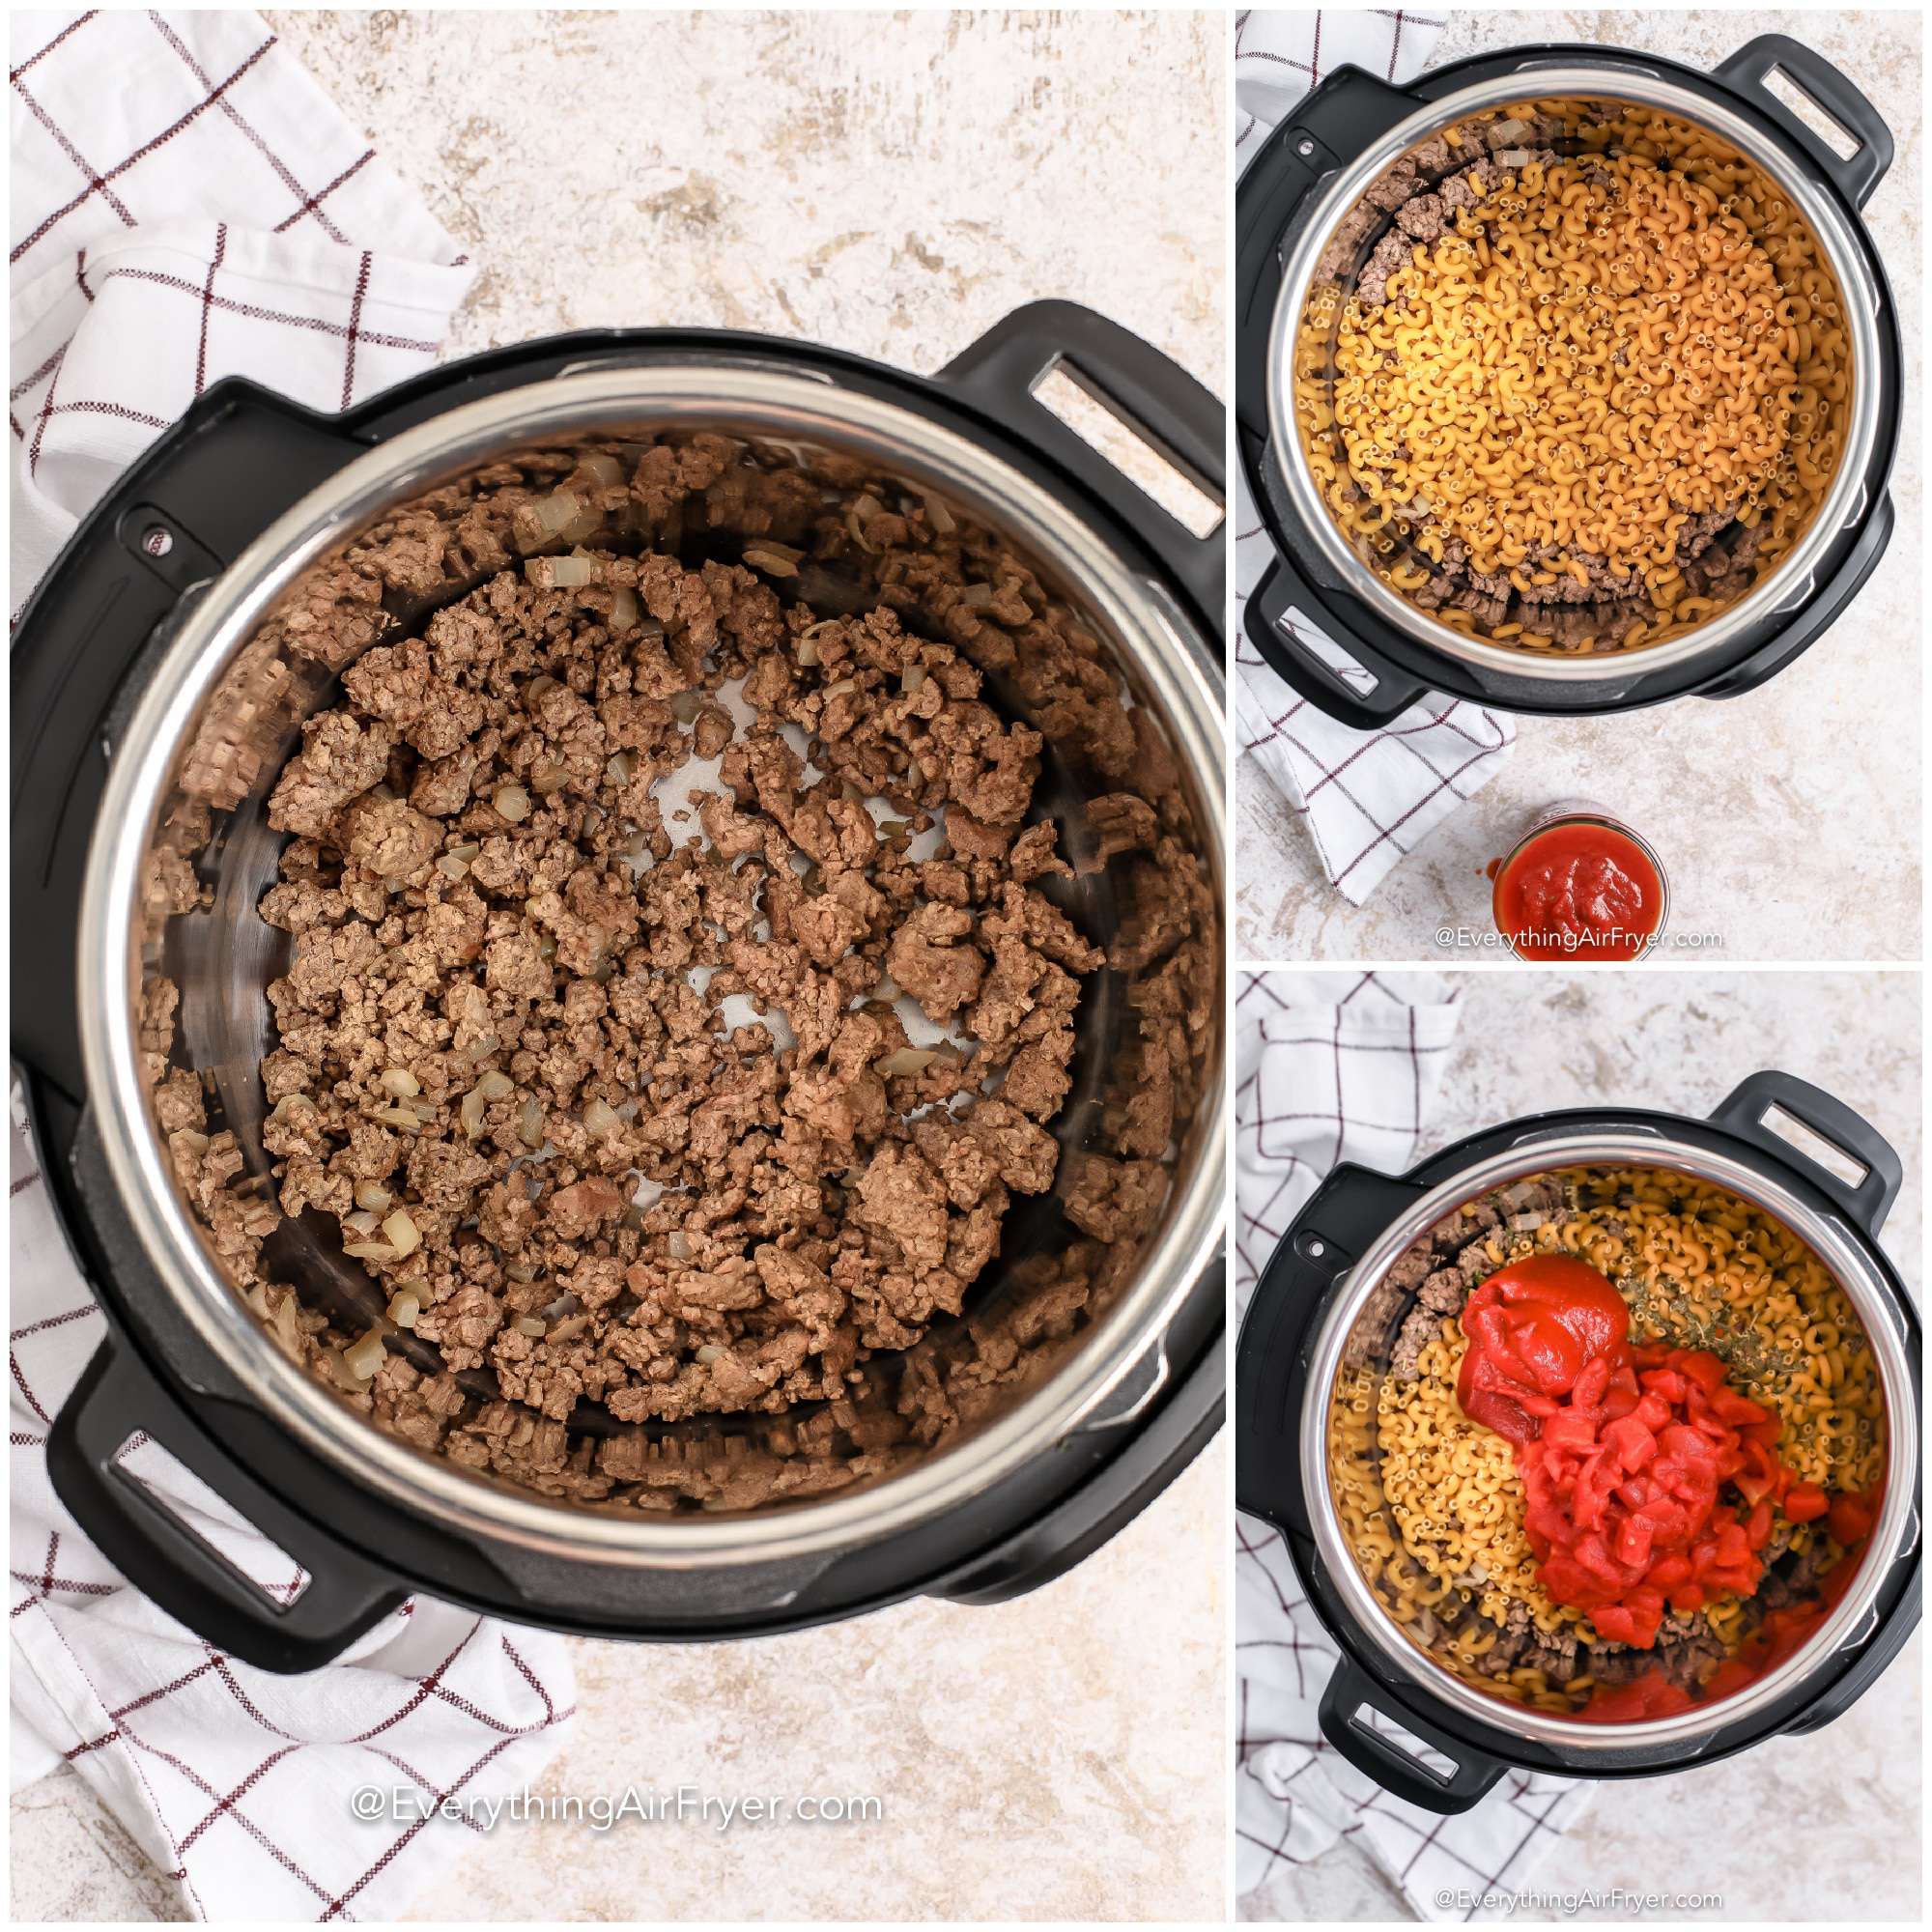 Steps to prepare Instant Pot Goulash